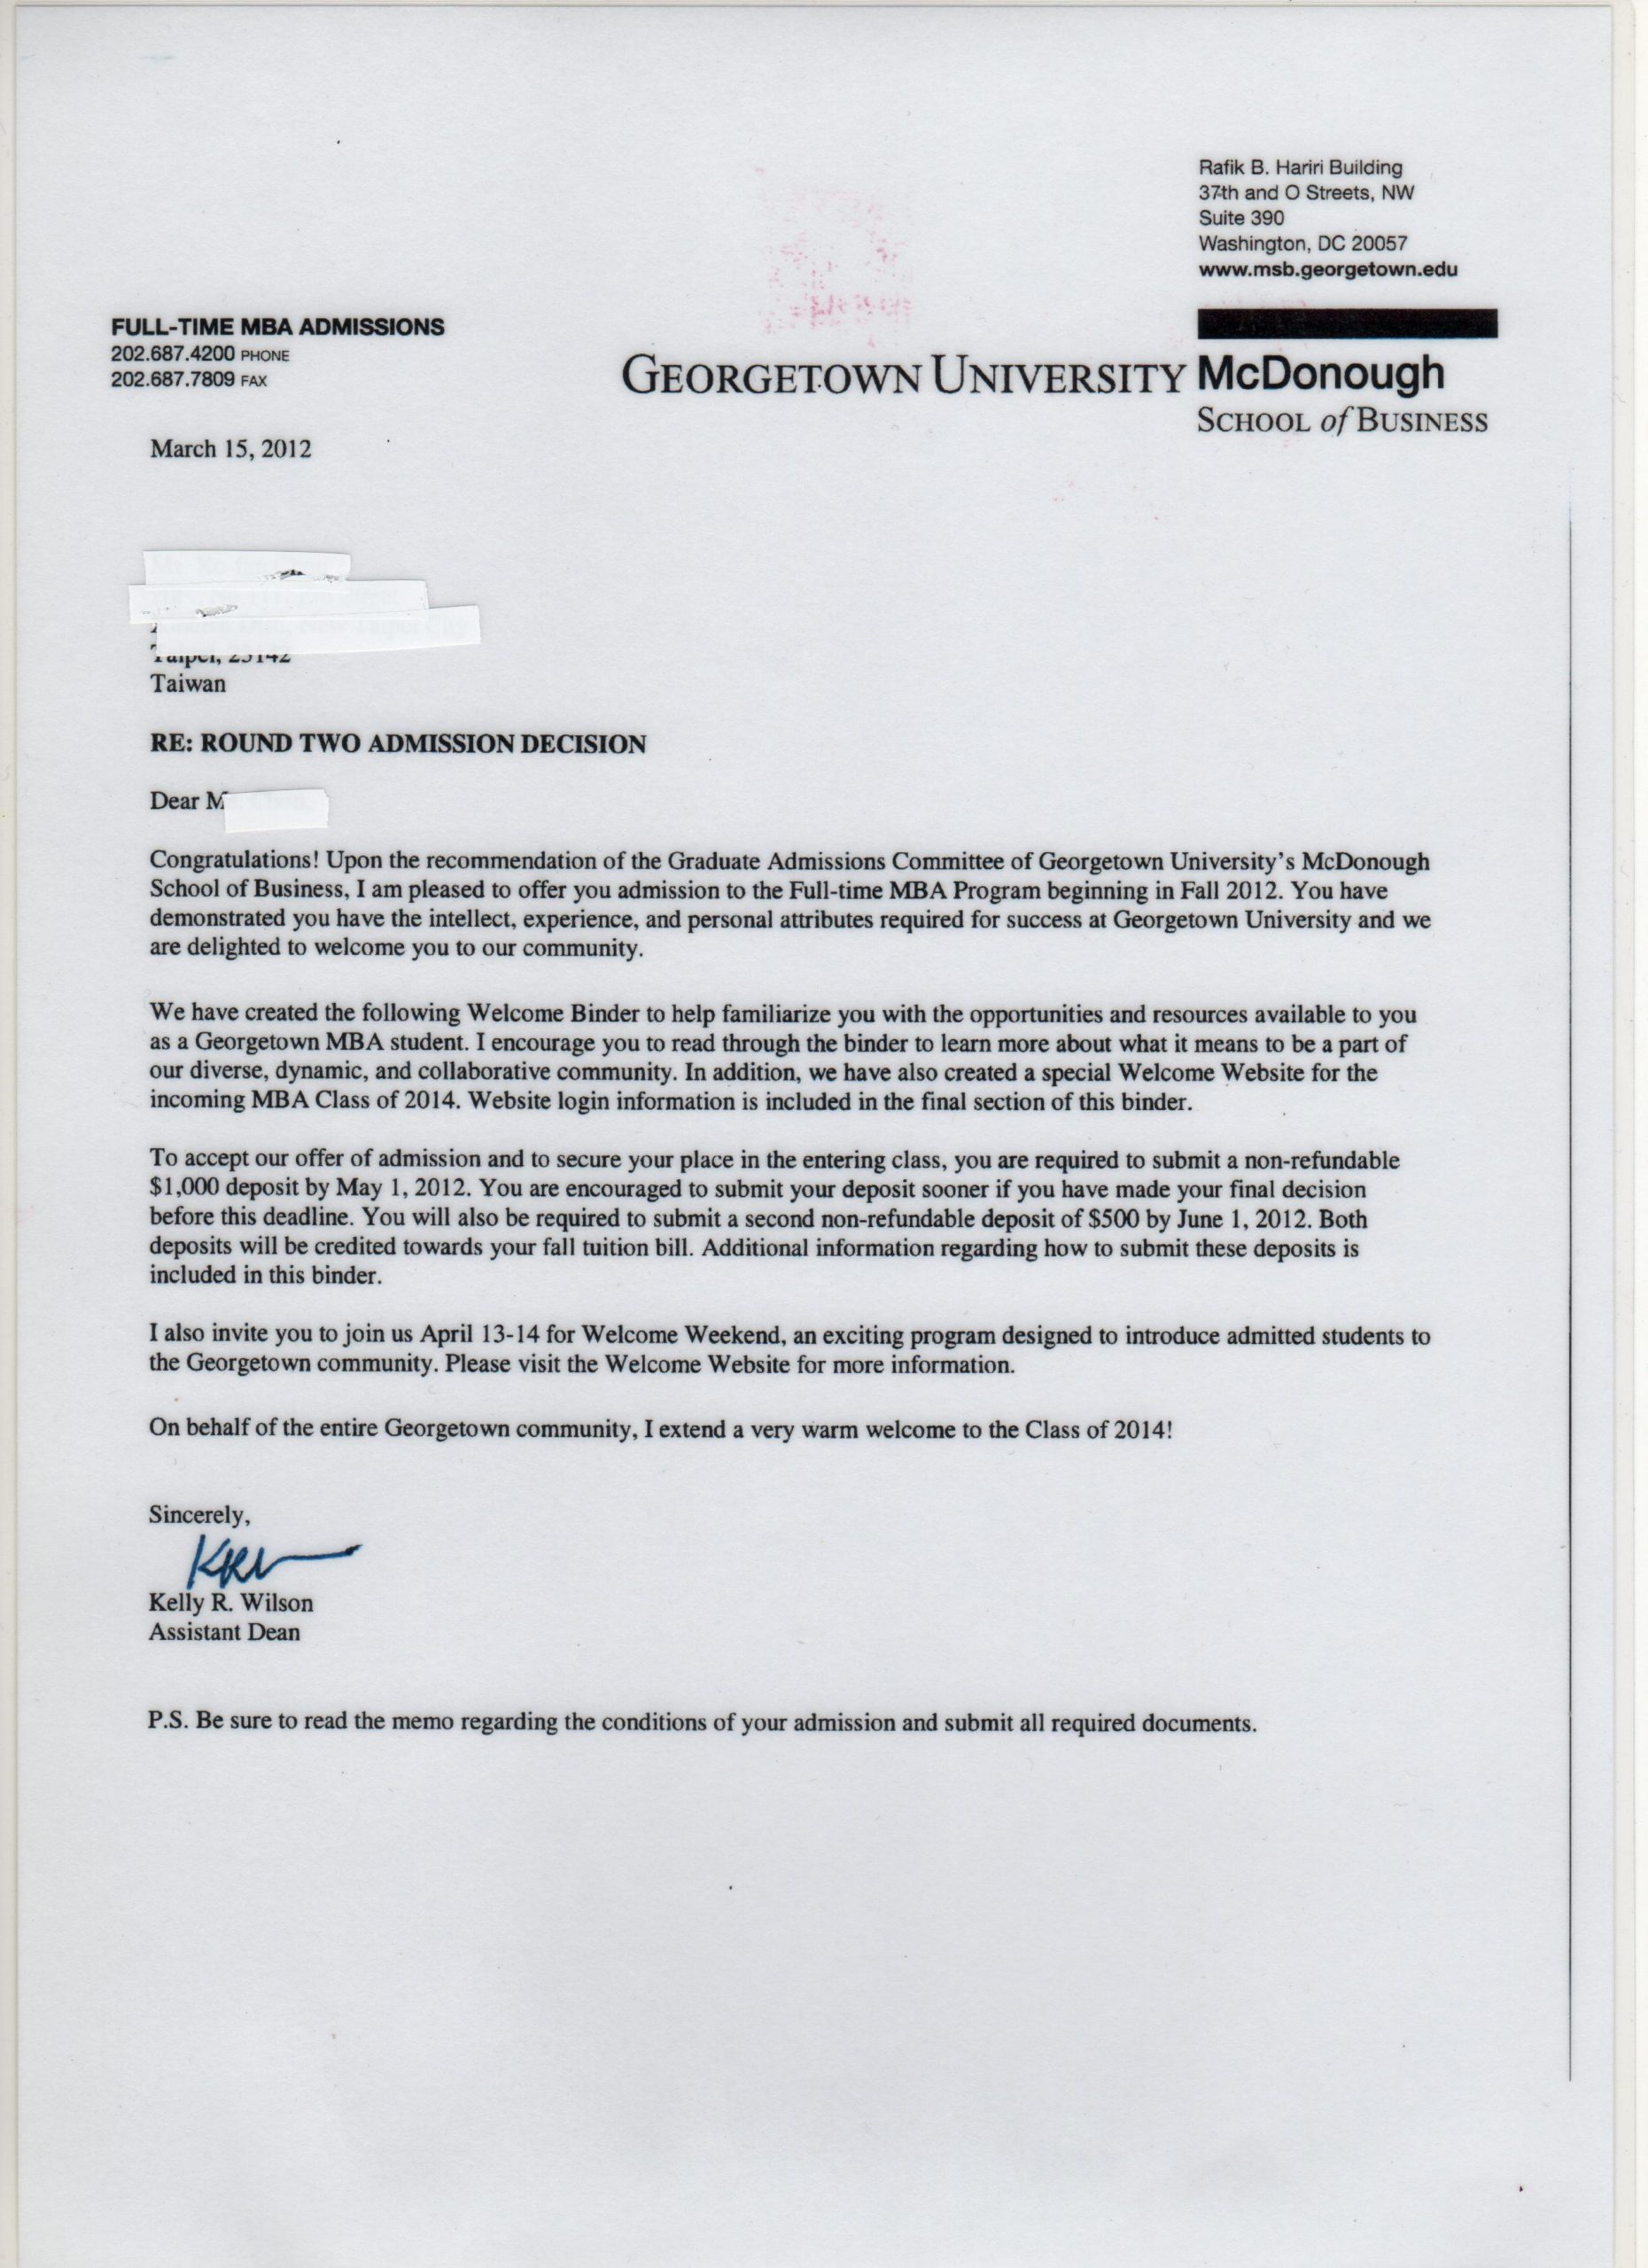 Georgetown application essays law optional